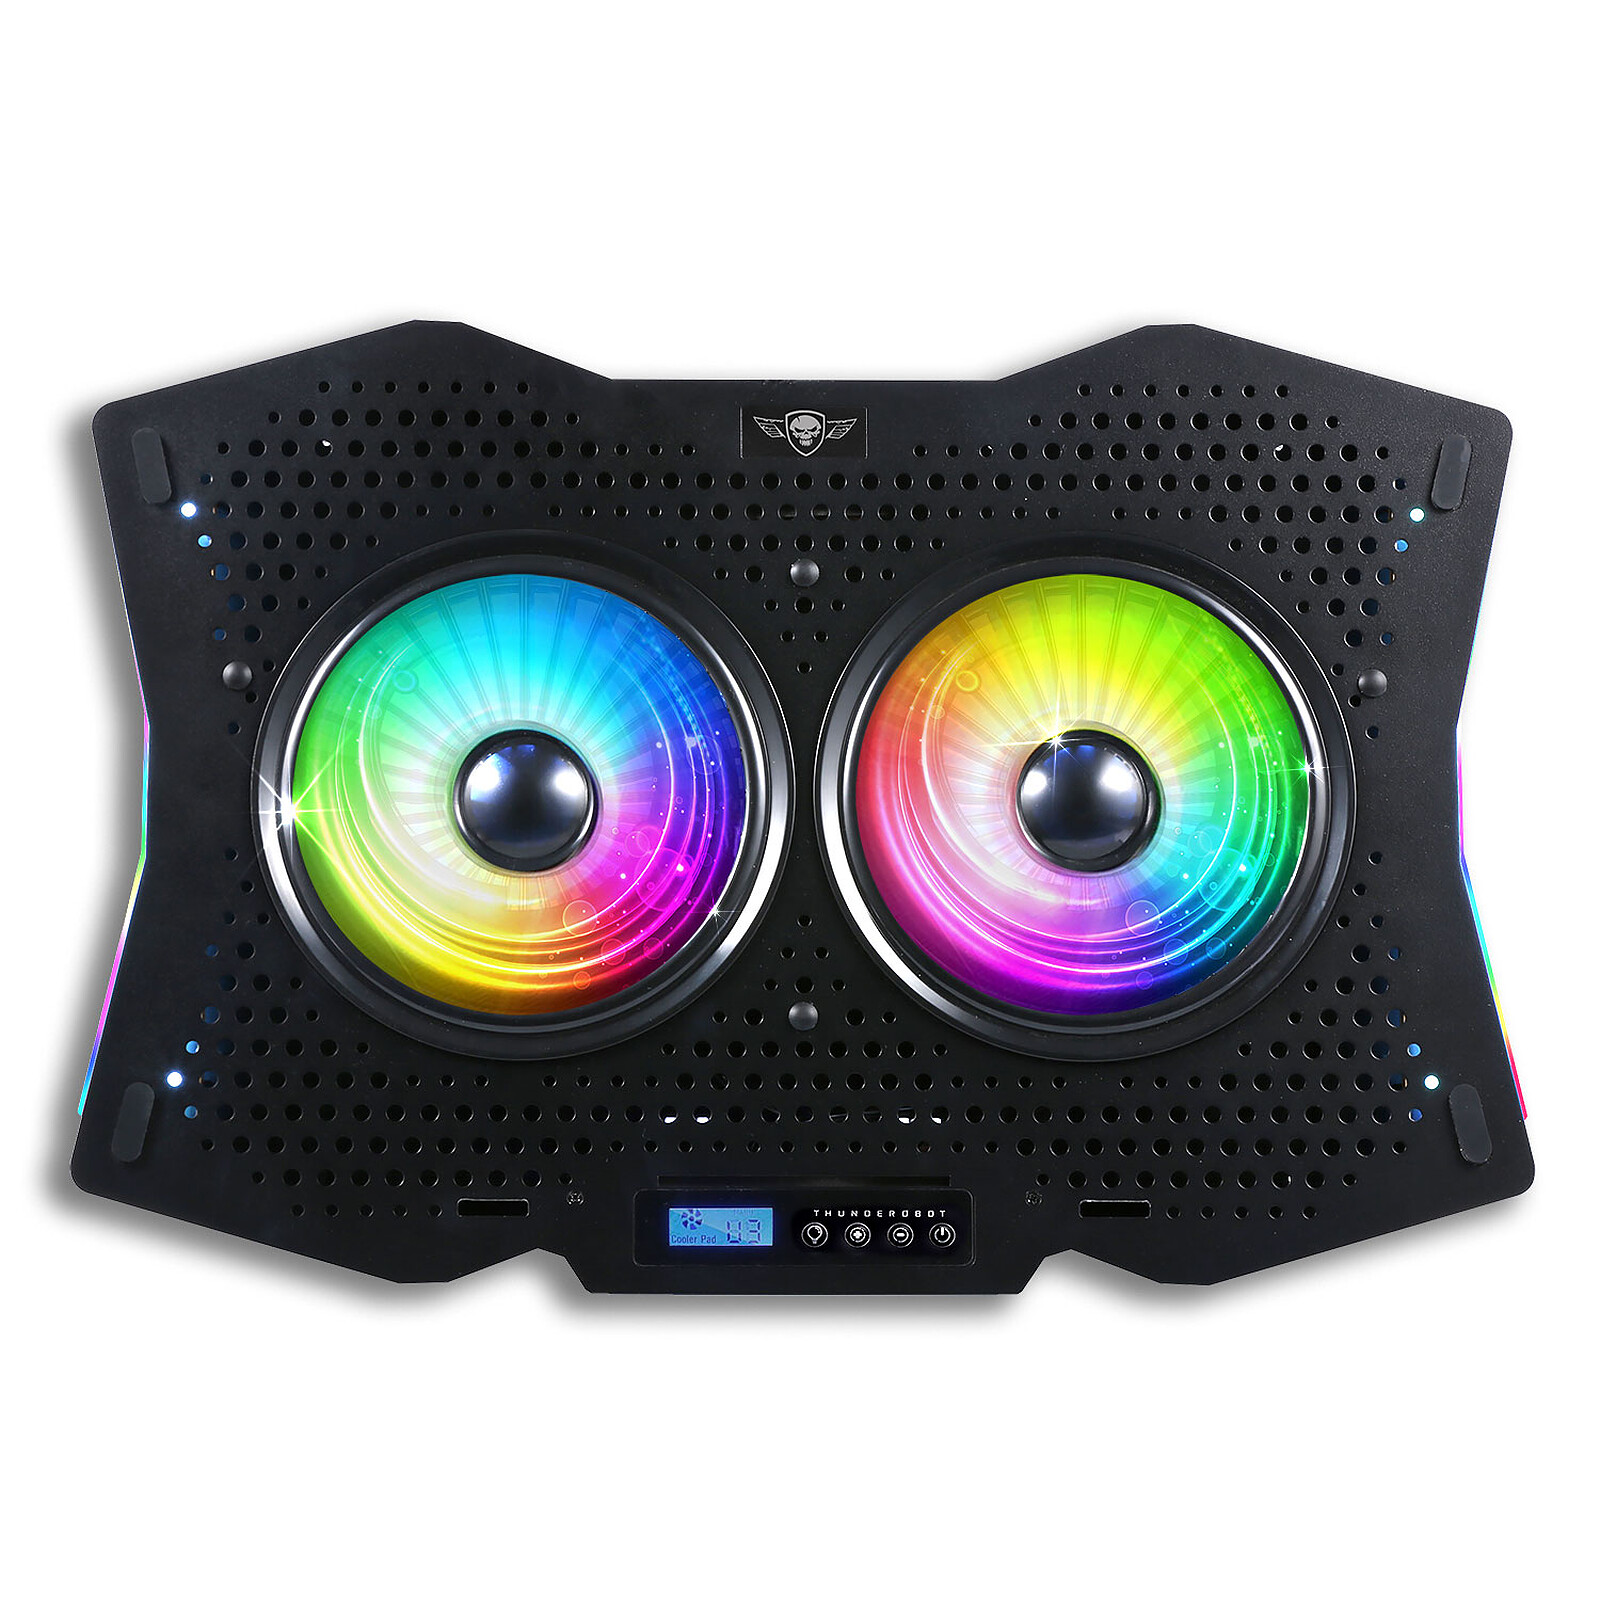 Spirit Of Gamer – AIRBLADE 1200 – Support PC Portable Ventilé RGB